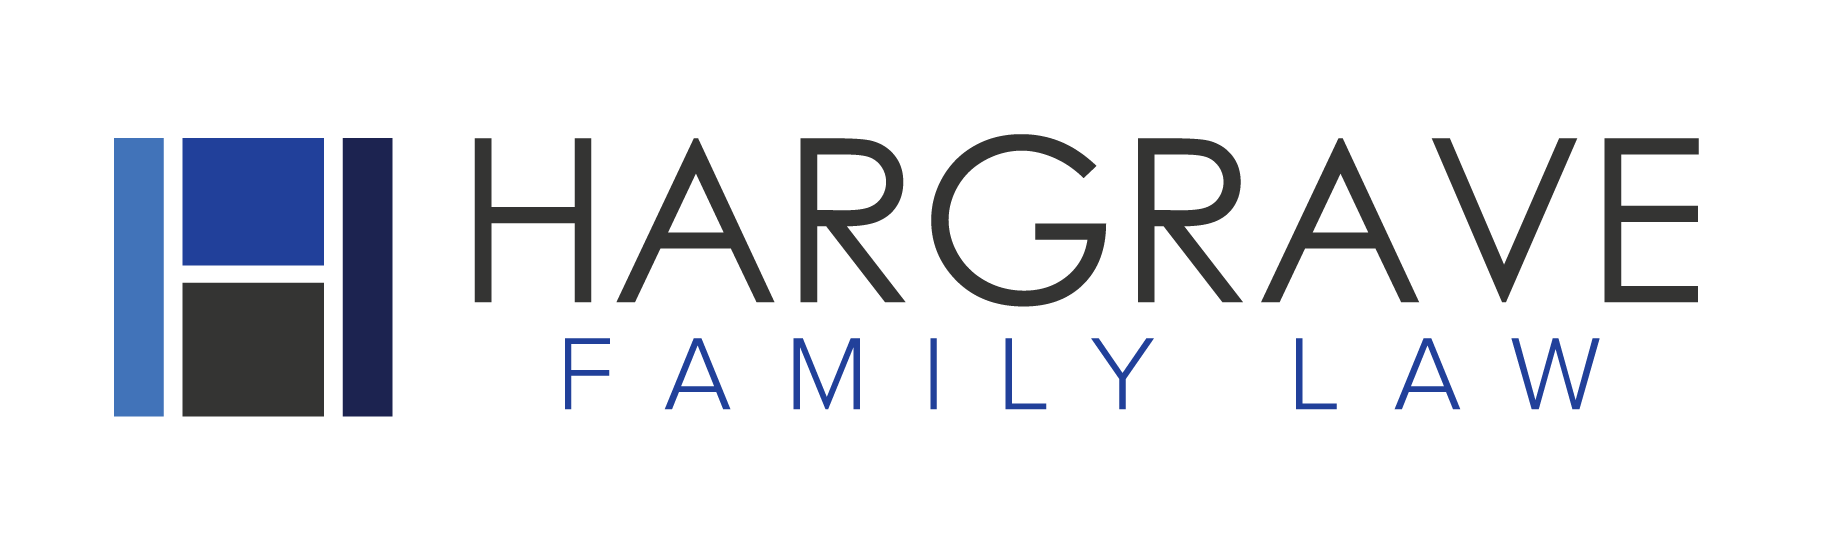 Hargrave Family Law sponsor logo